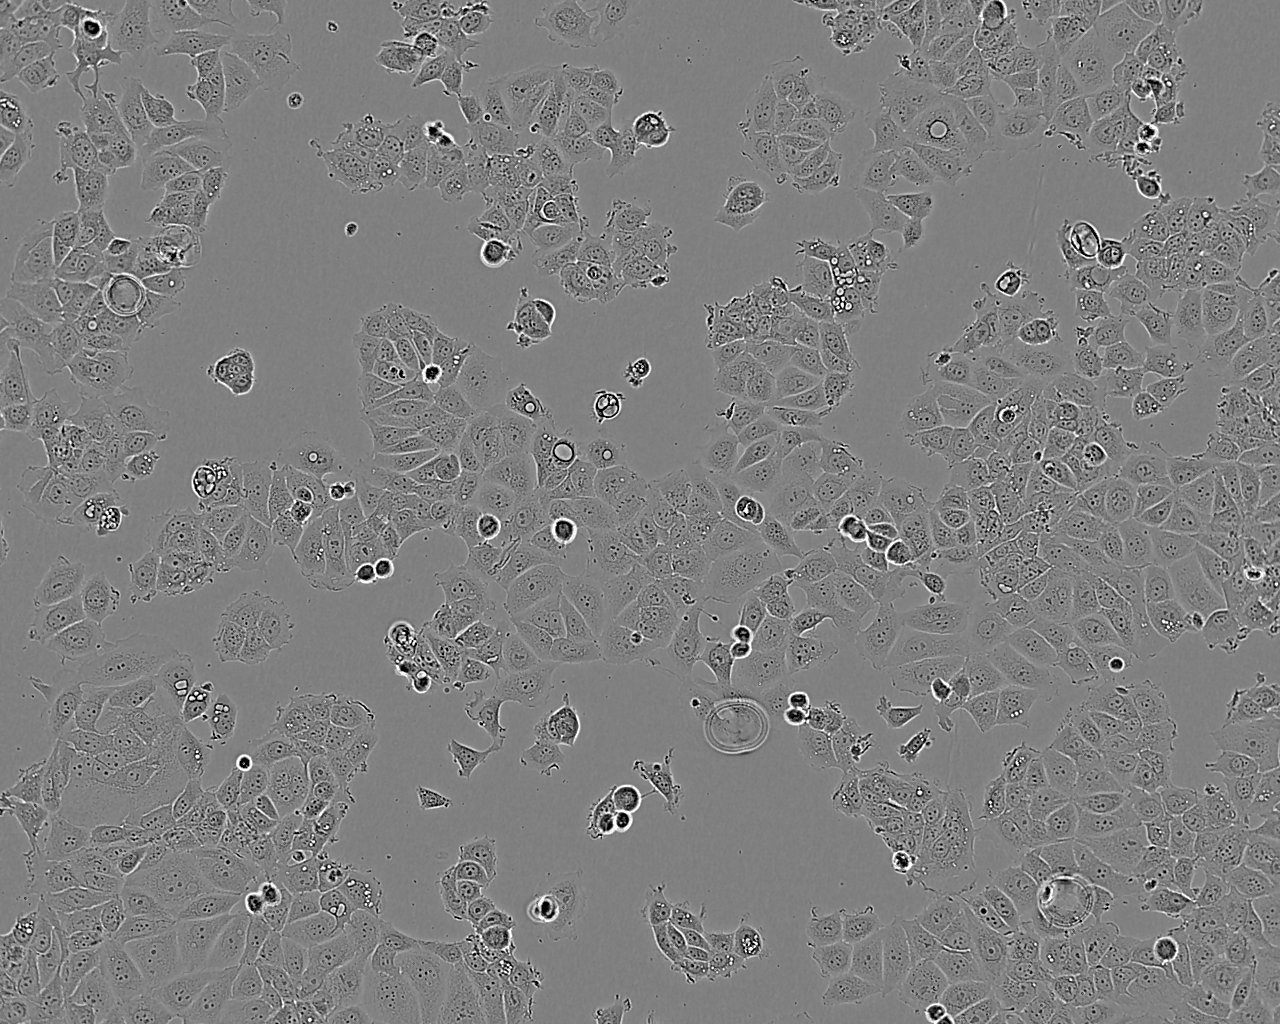 SMA-560 cell line小鼠星形胶质瘤细胞系,SMA-560 cell line